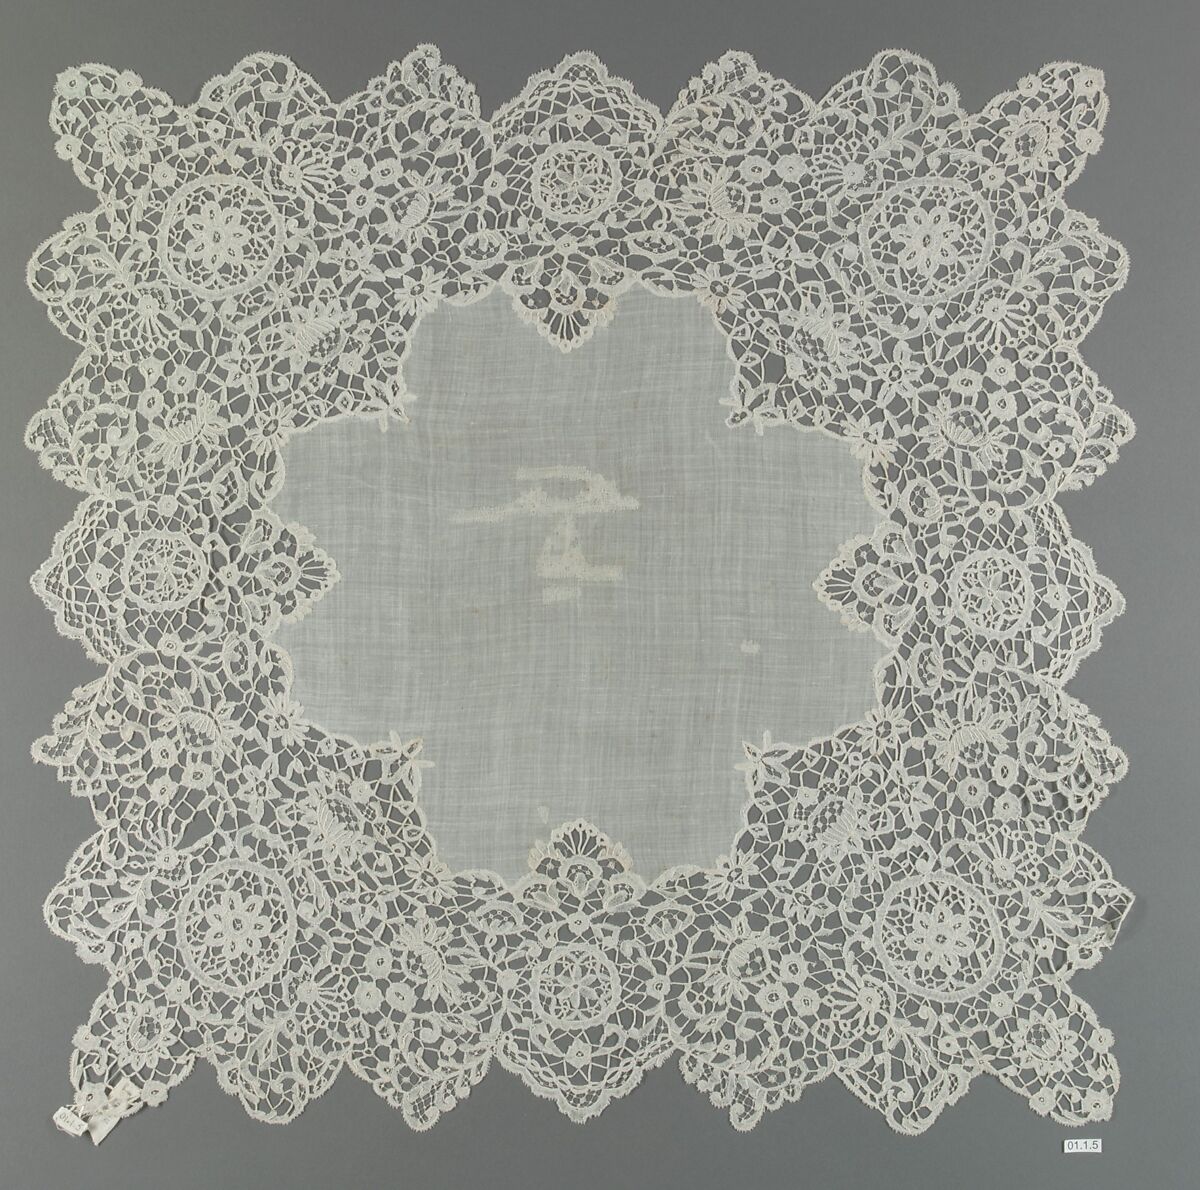 Handkerchief, Bobbin lace, British, Honiton 